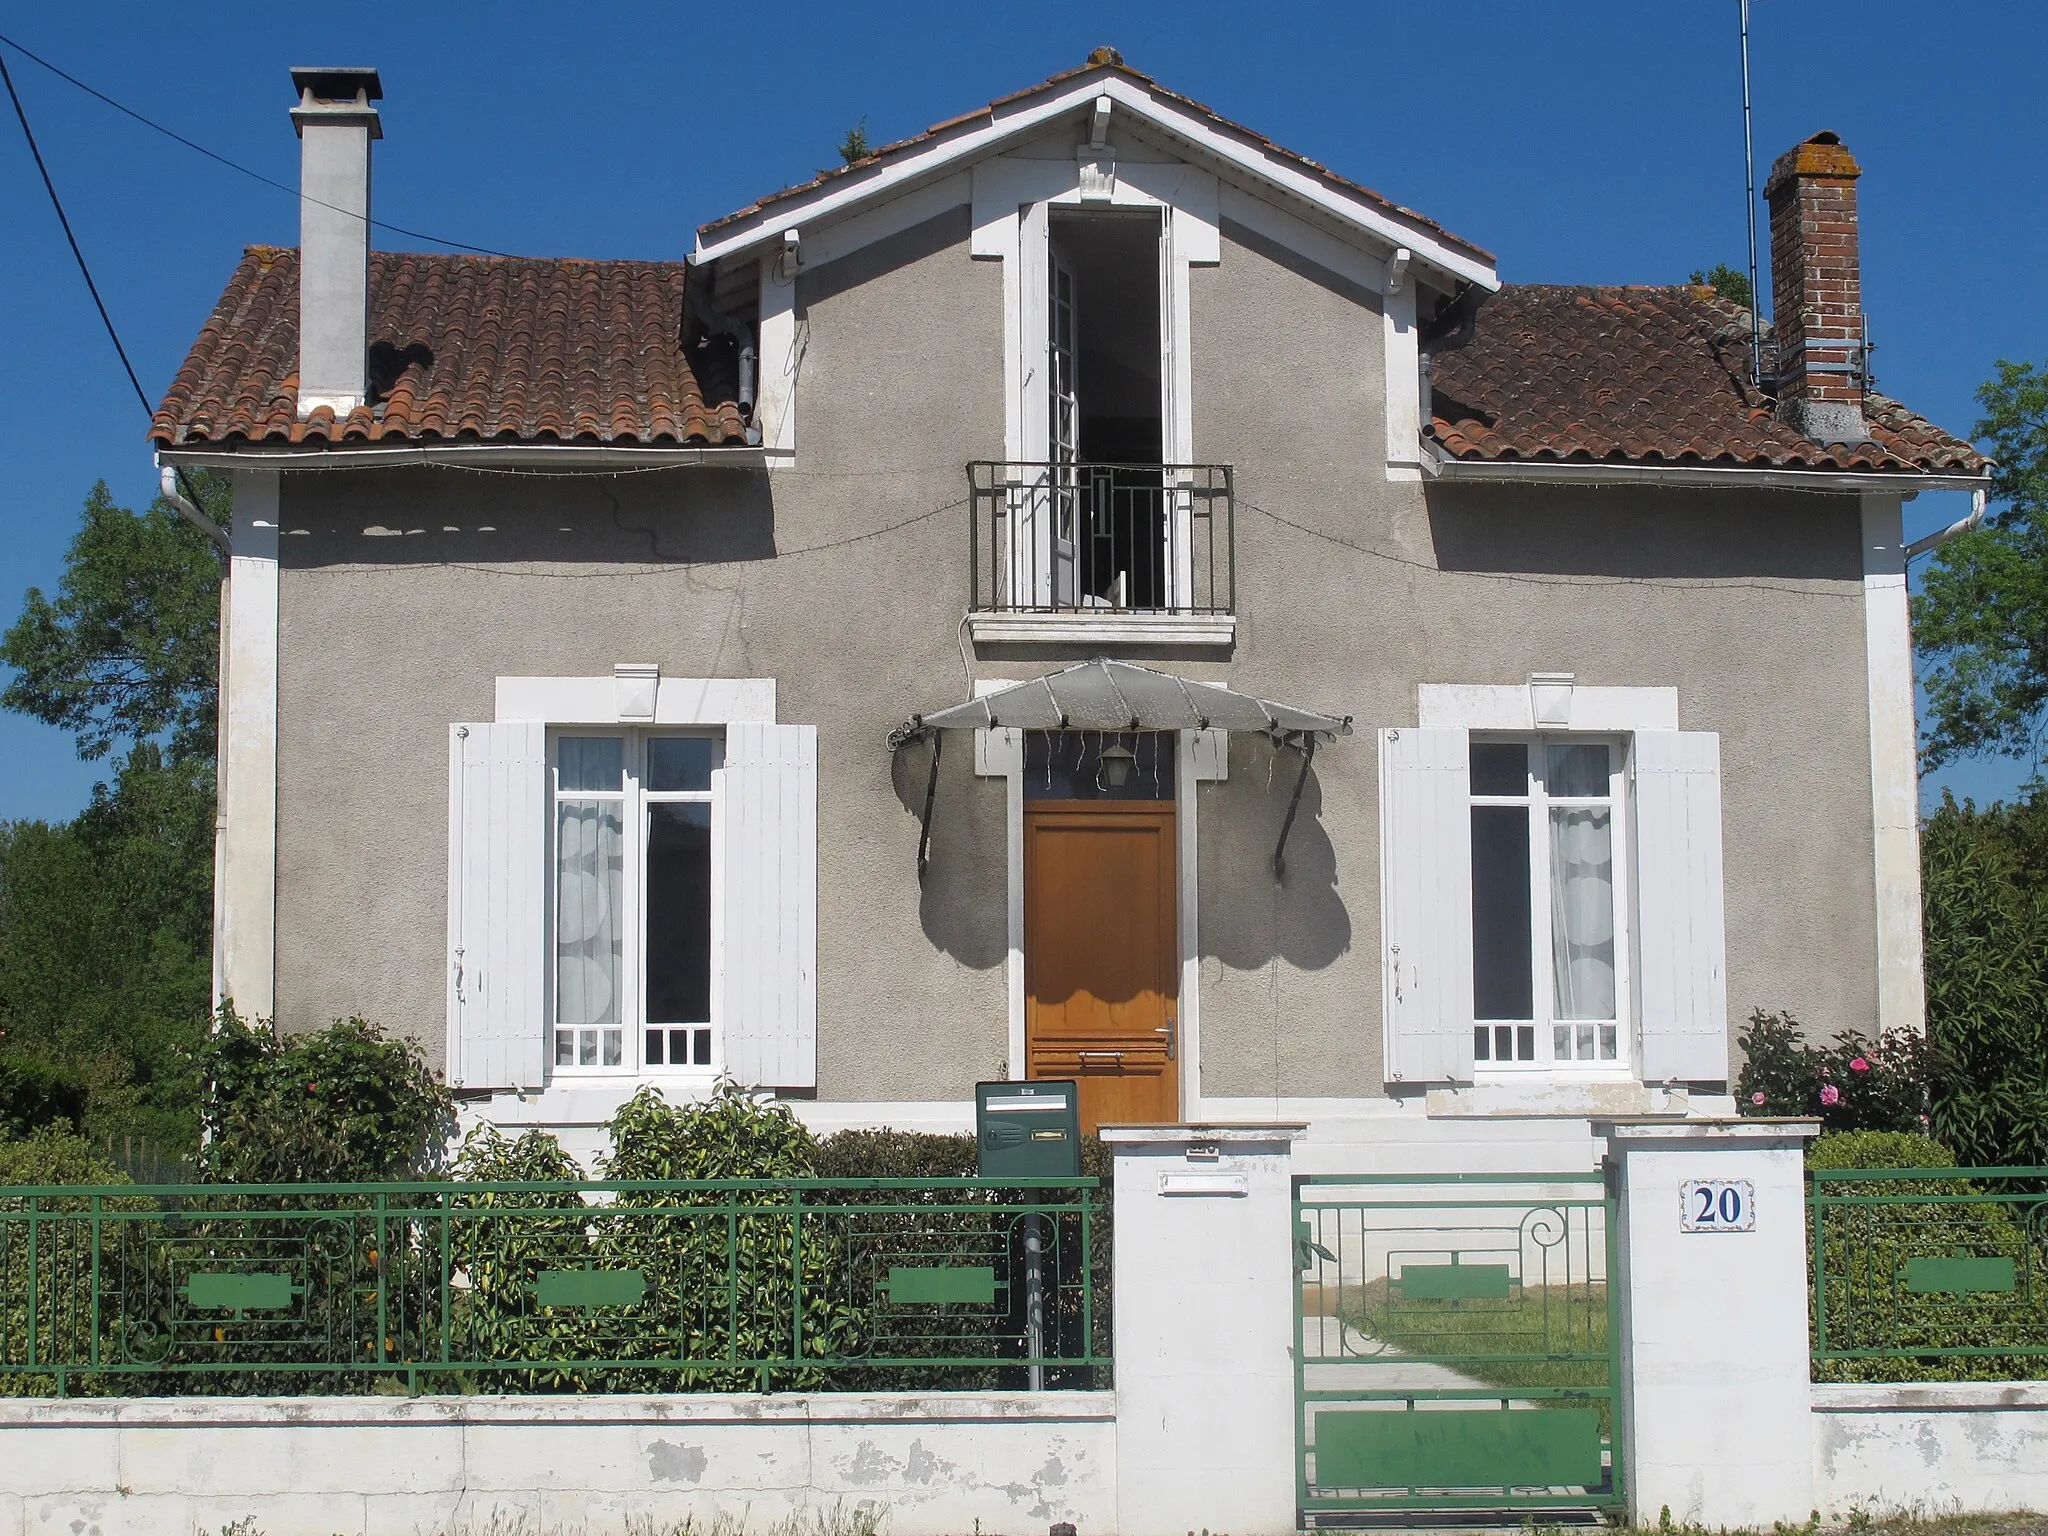 Photo showing: Maison 20 rue Edmond-Rostand, Pineuilh (Gironde).